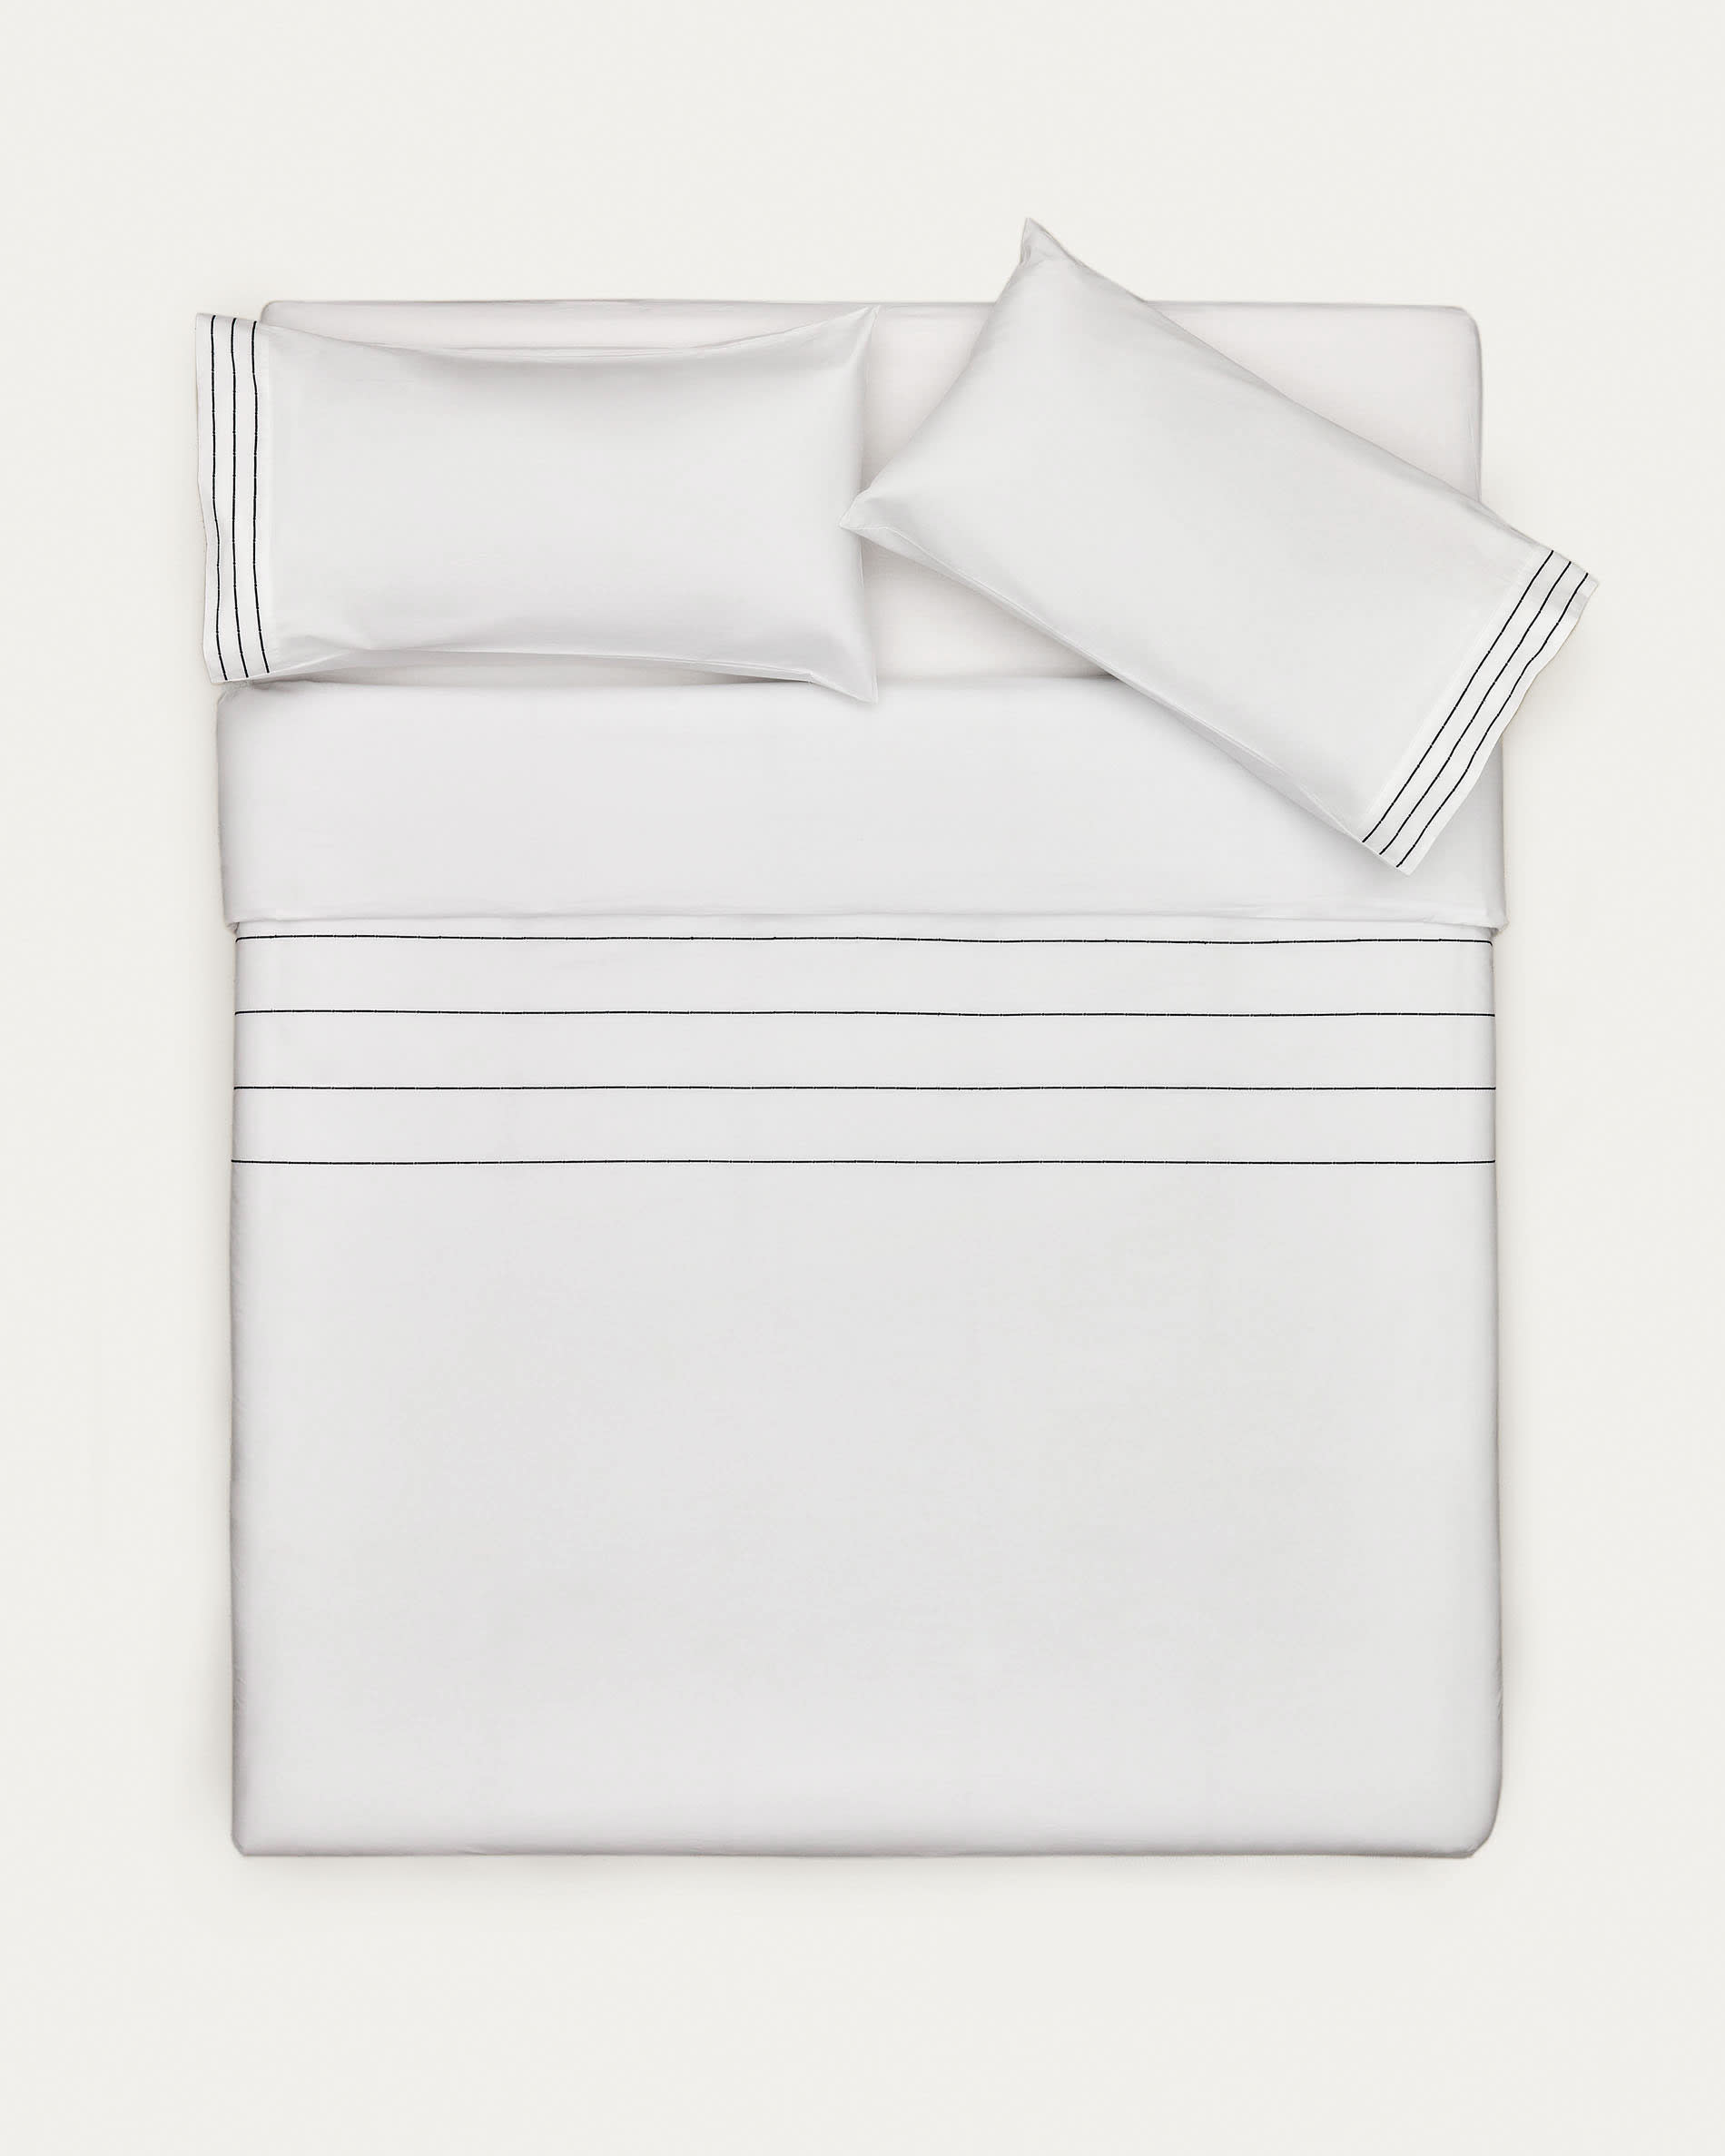 Set Cintia fundas nórdica y de almohada algodón percal blanco bordado rayas cama  135 cm